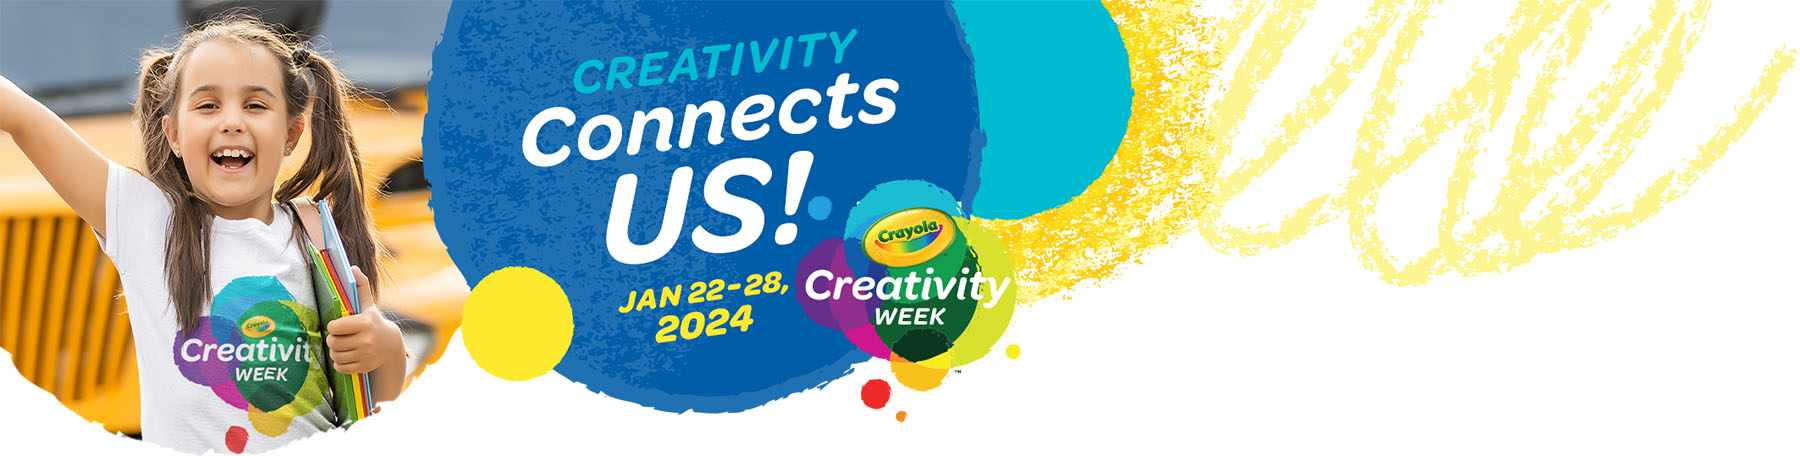 Creativity Connects Us! Jan 22-28, 2024 Crayola Creativity Week